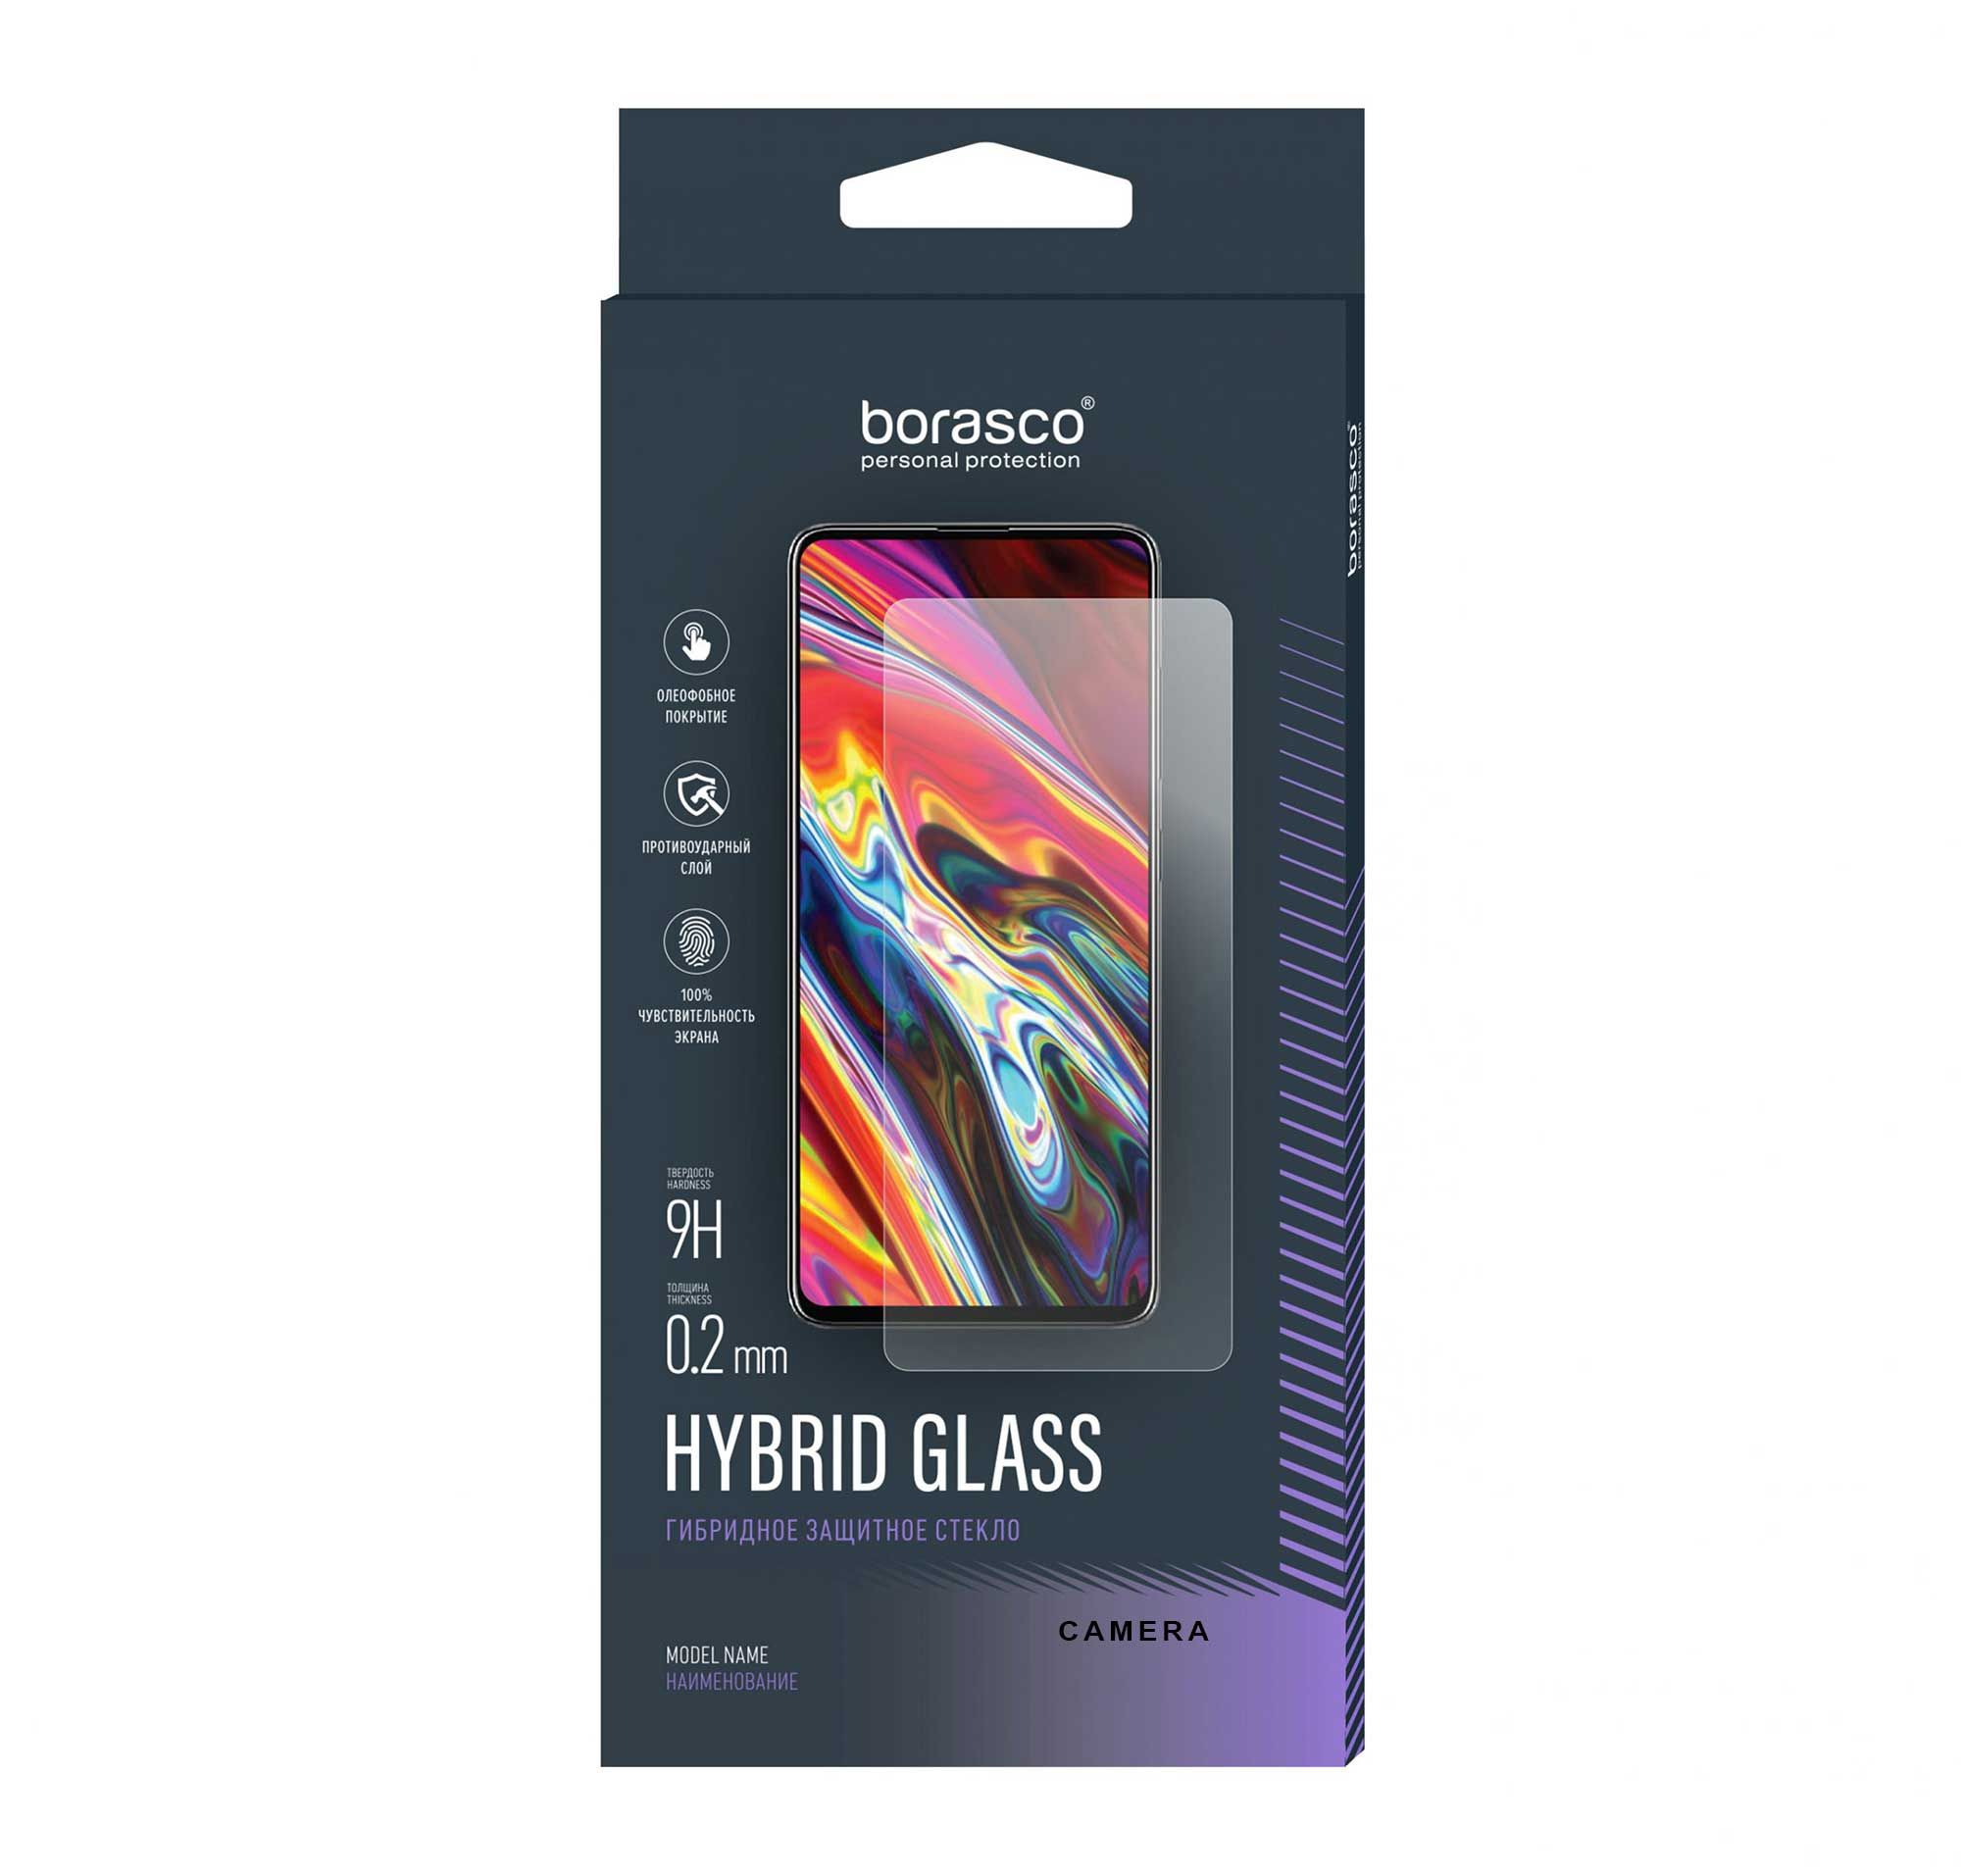 Защитное стекло (Экран+Камера) Hybrid Glass для UMIDIGI BISON 2 защитное стекло для экрана oukitel bison 2021 f150 bison 2021 b2021 2 шт